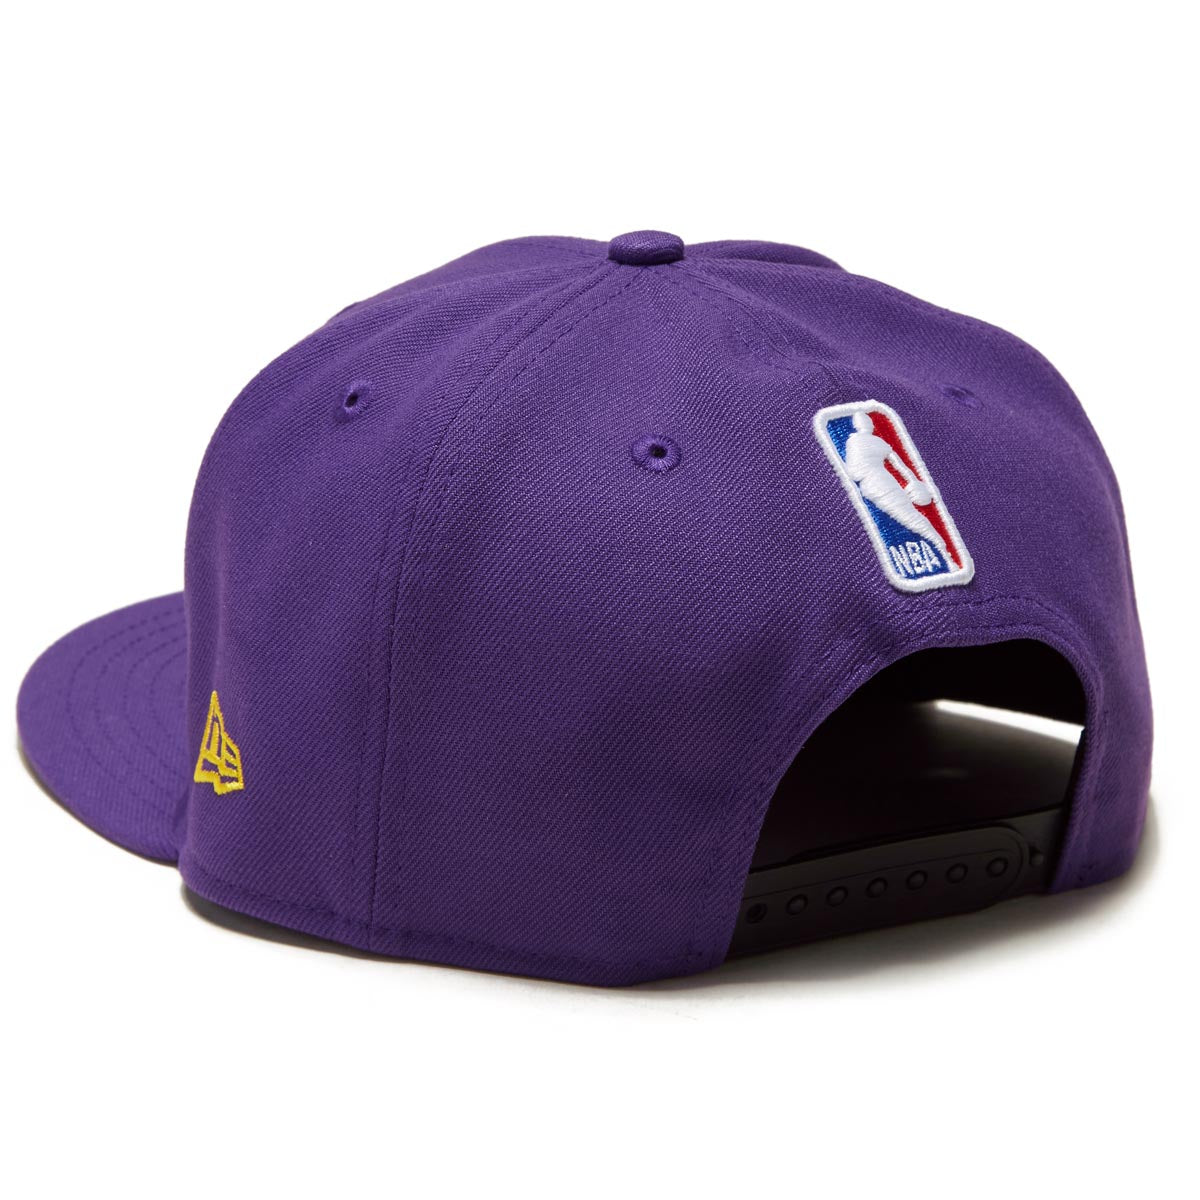 New Era x NBA 950 ALT 23 Los Angeles Lakers Hat - Purple image 2